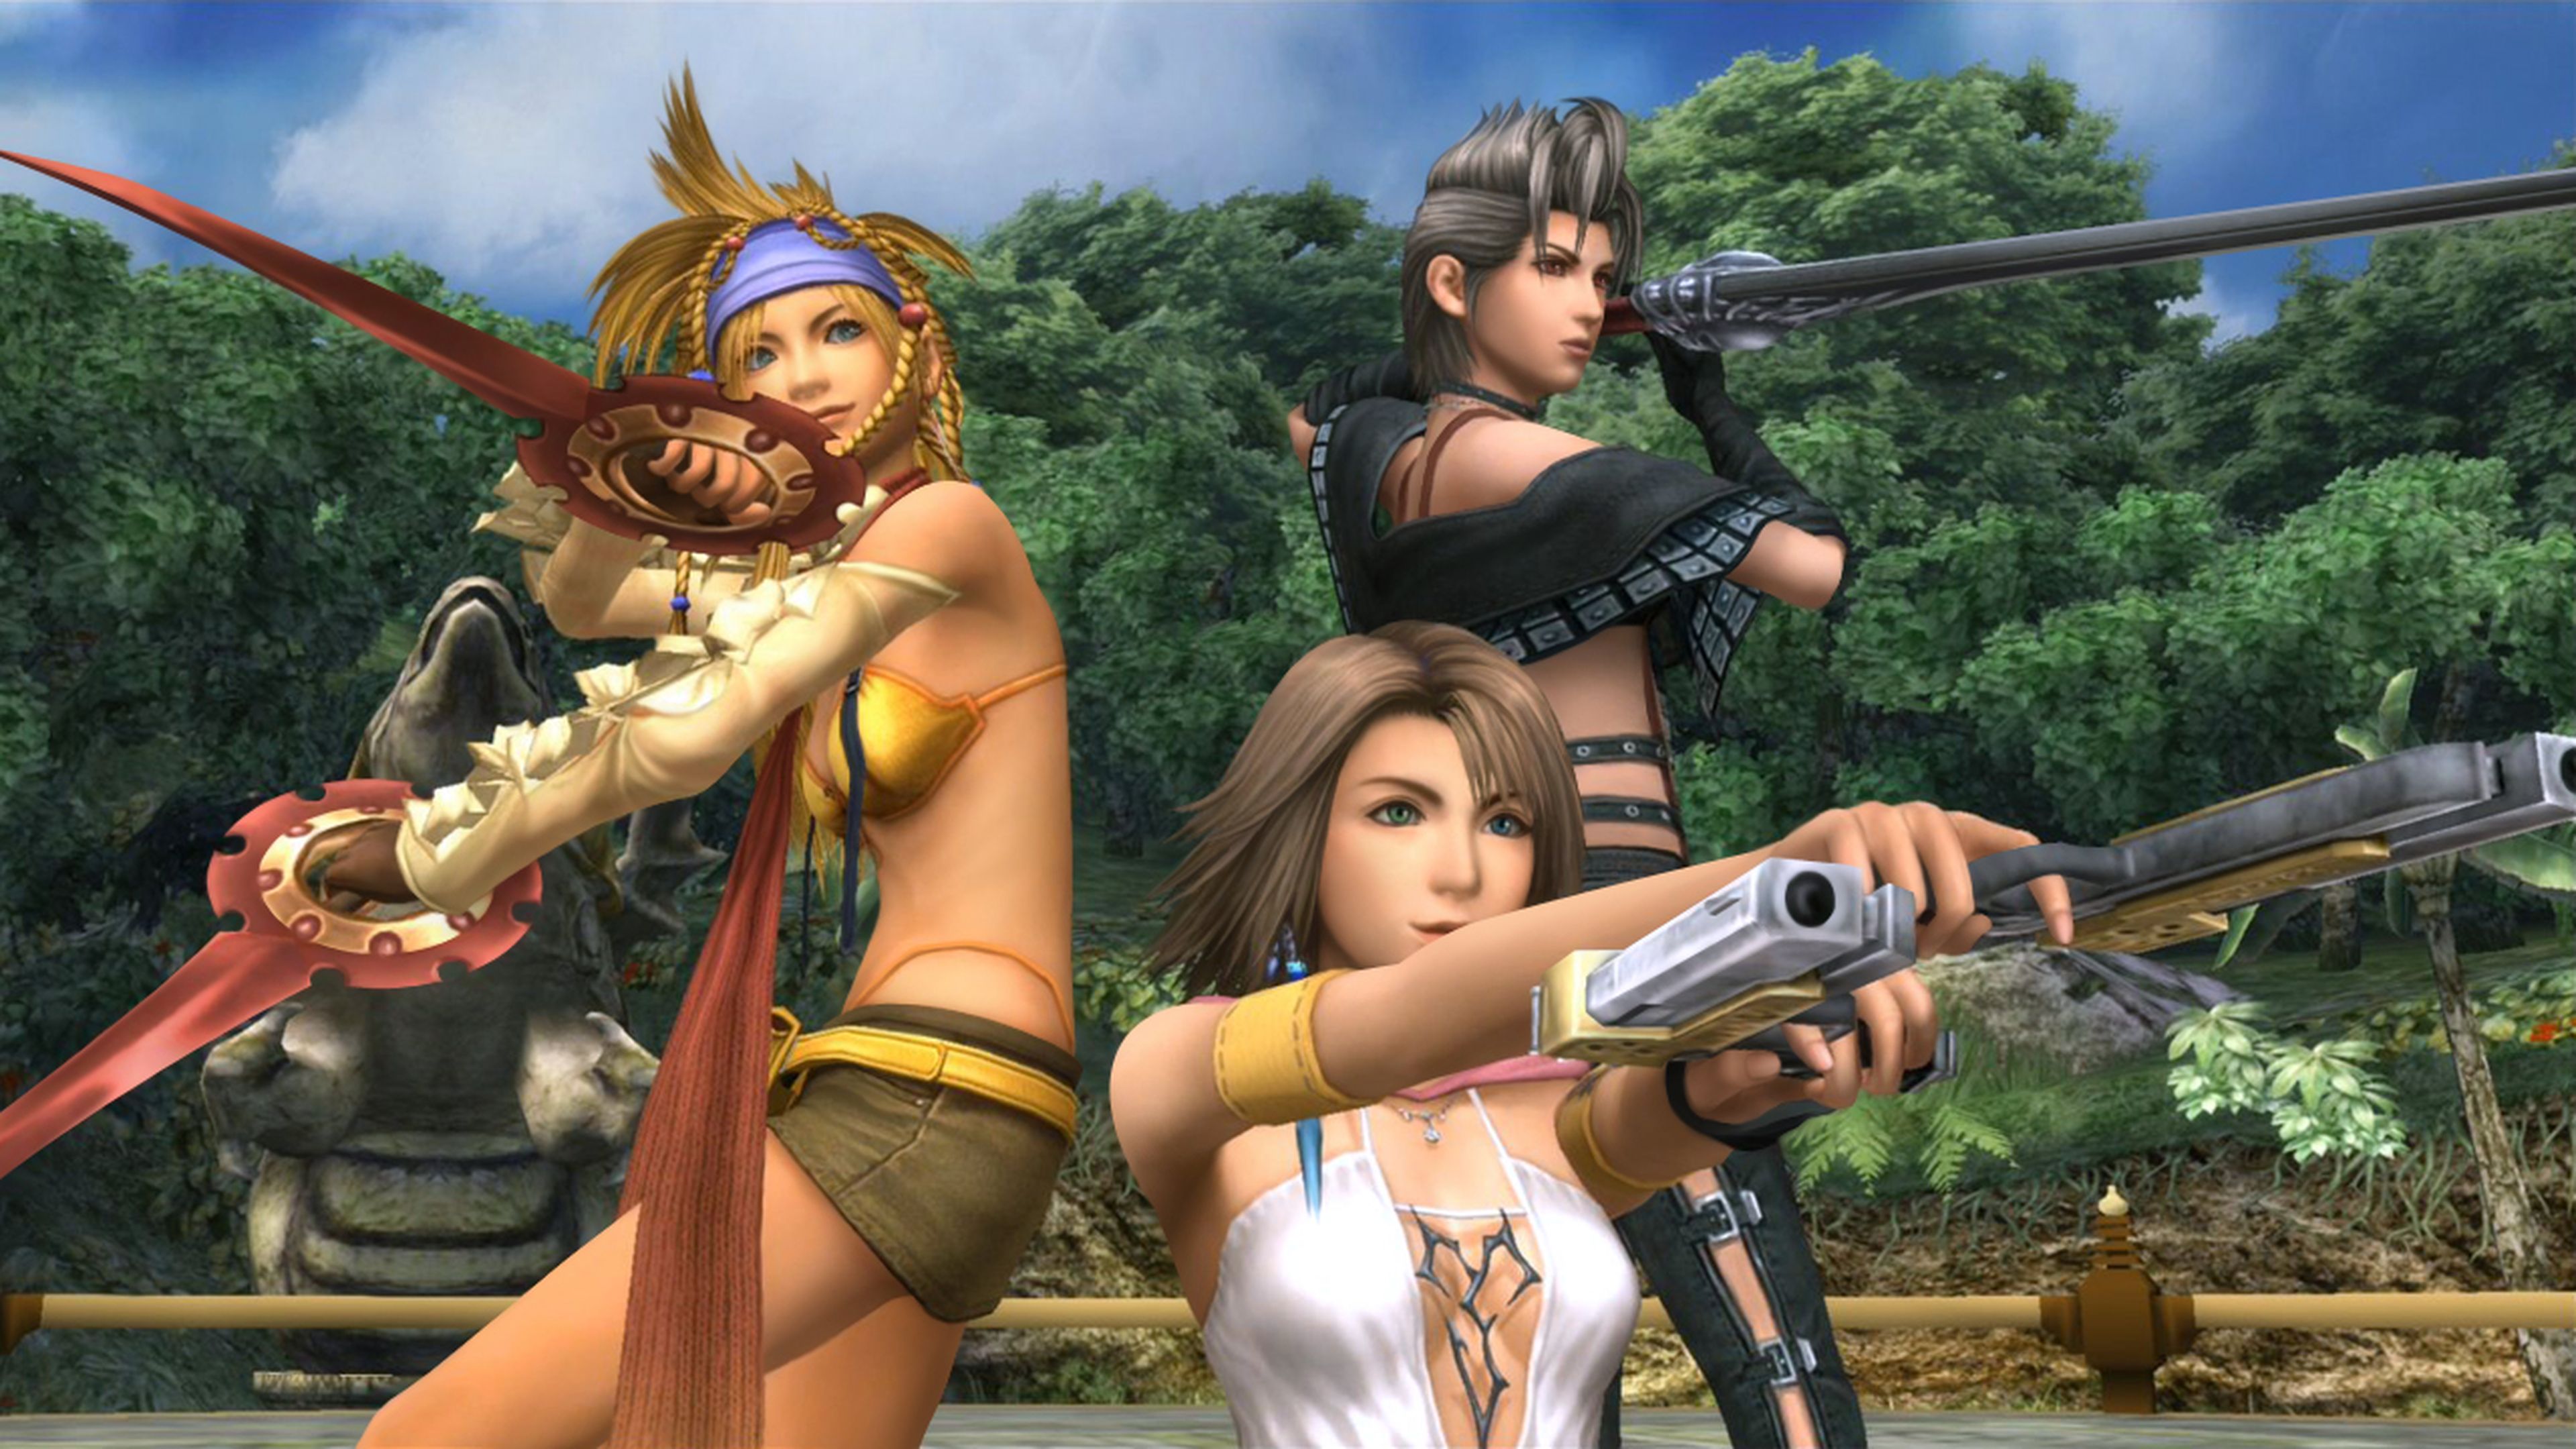 Análisis de Final Fantasy X/X-2 HD Remaster